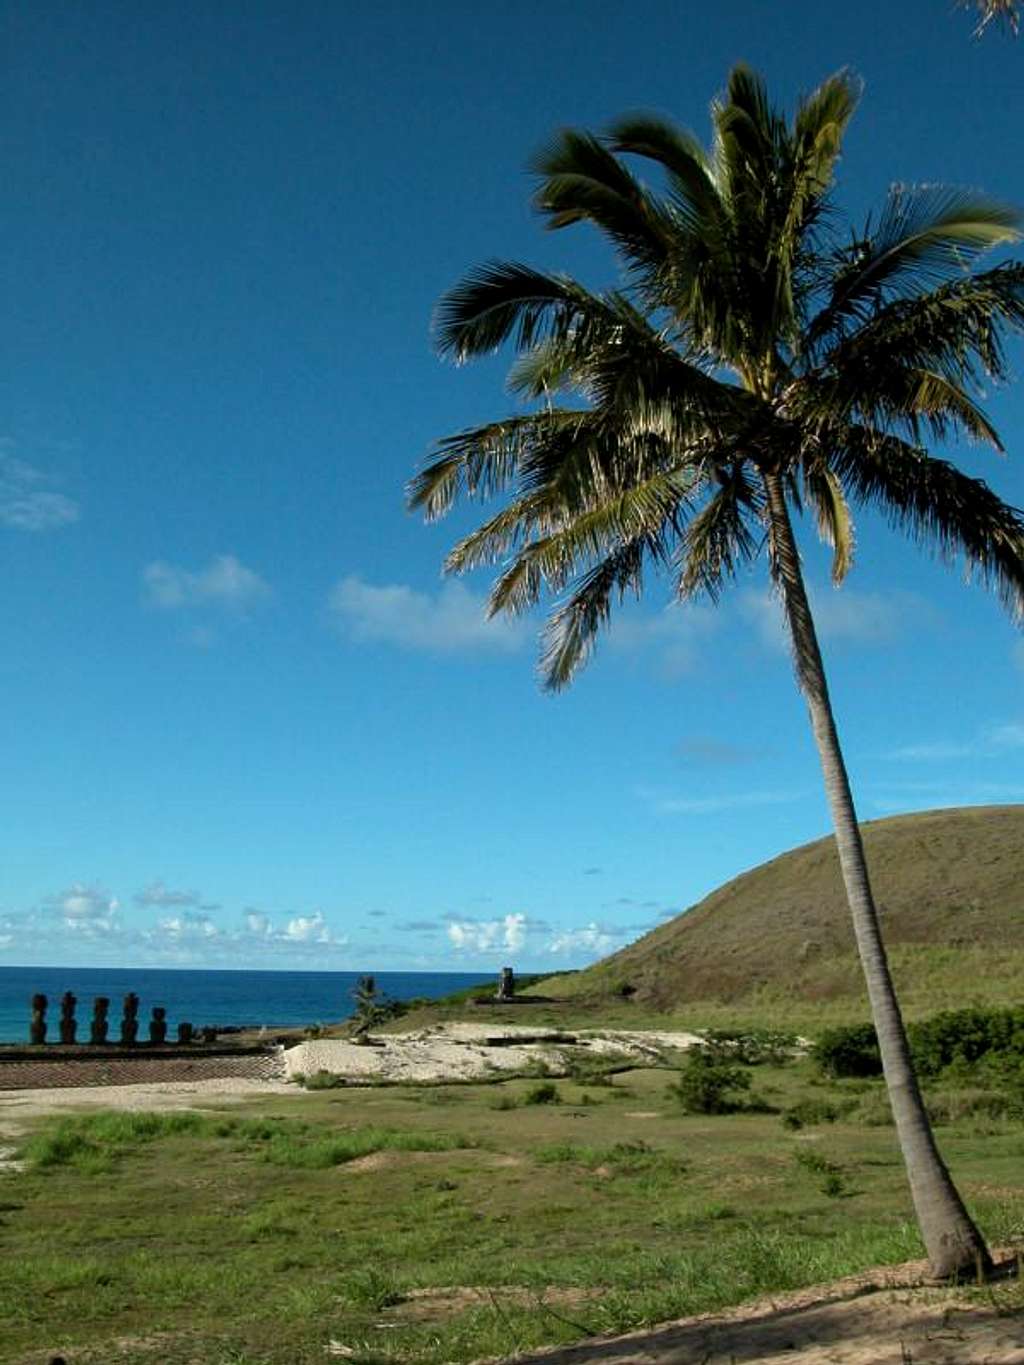 Anakena beach - Easter Island